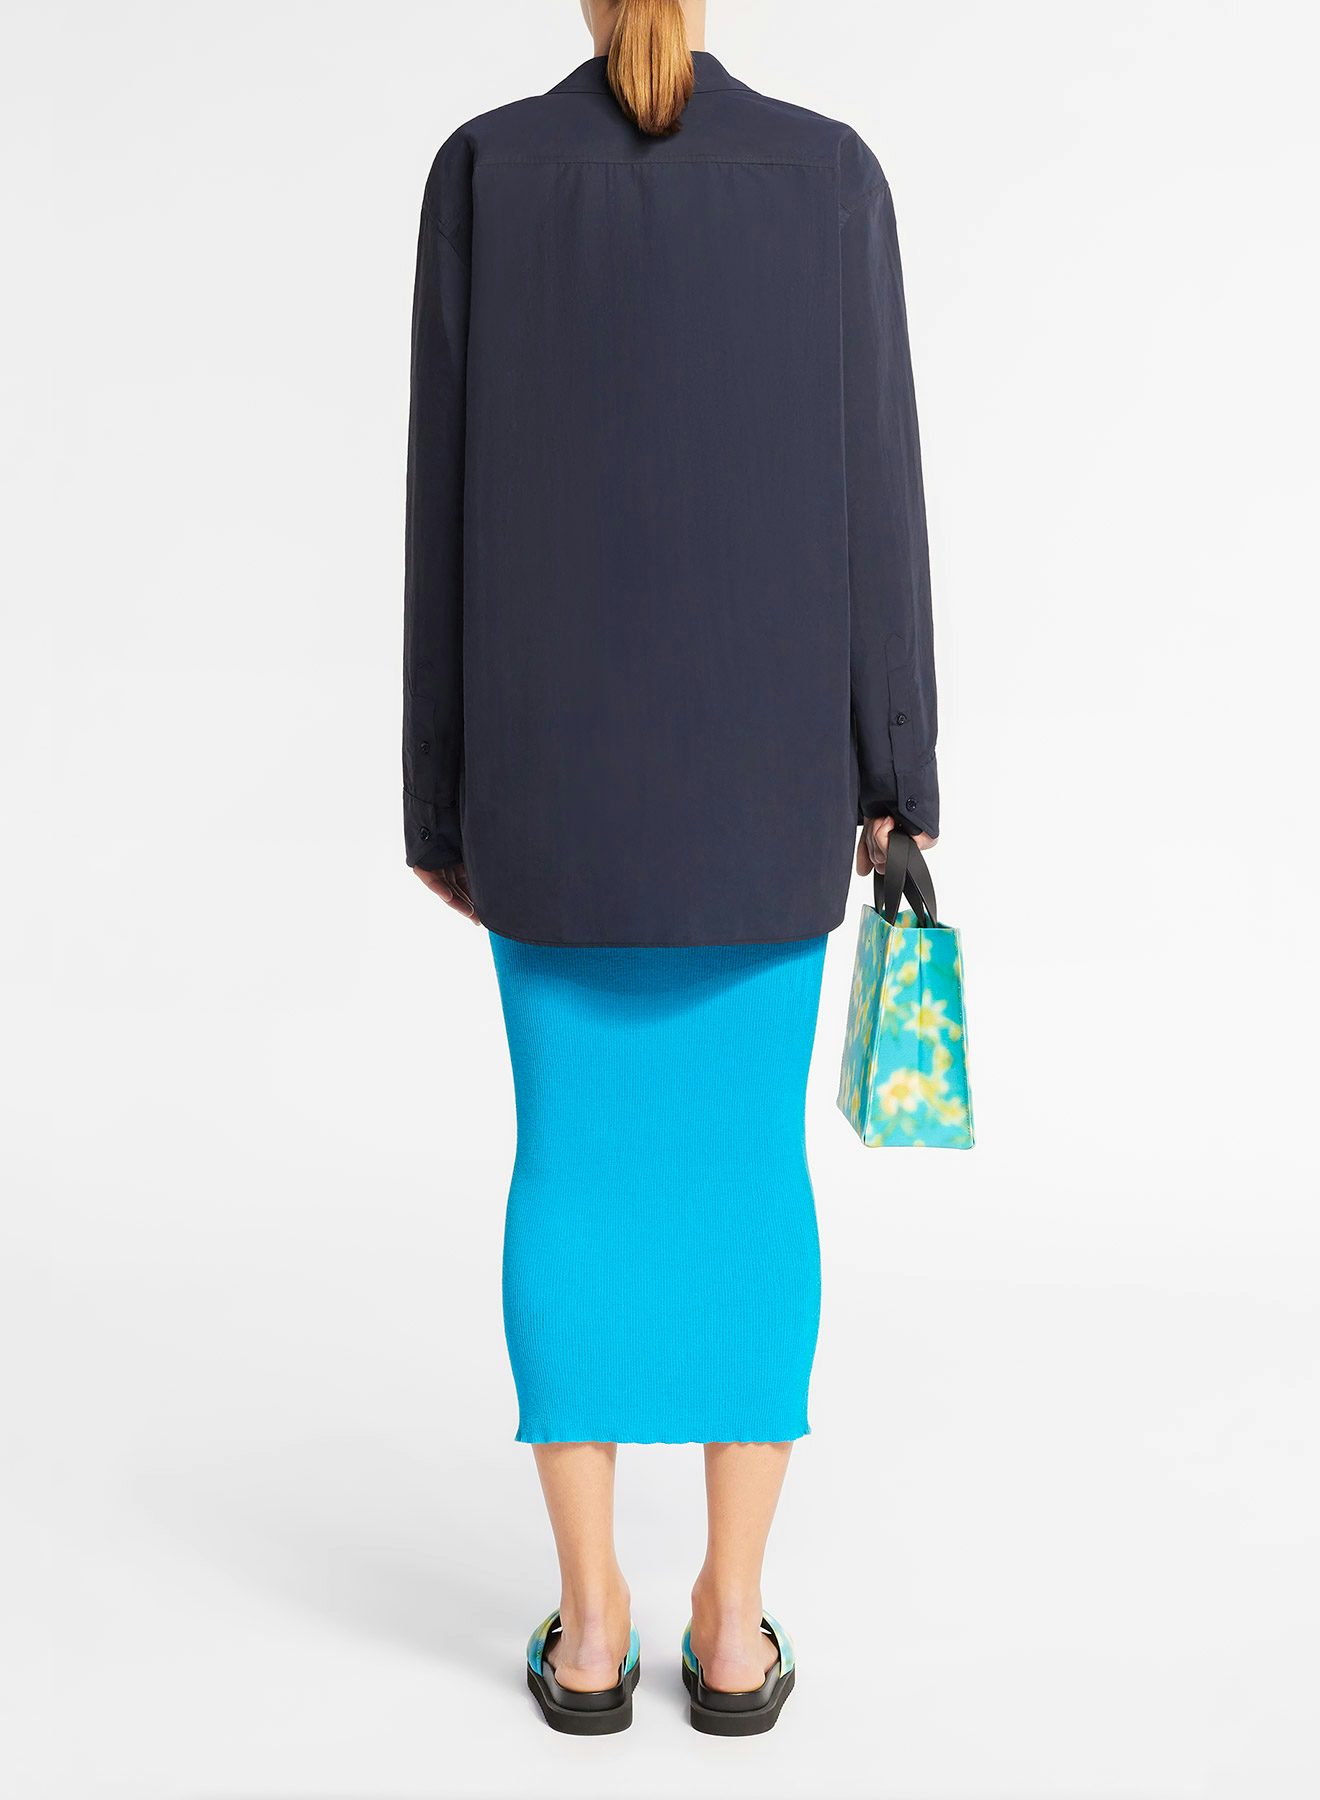 Cyan thin knit tank dress - Nina Ricci